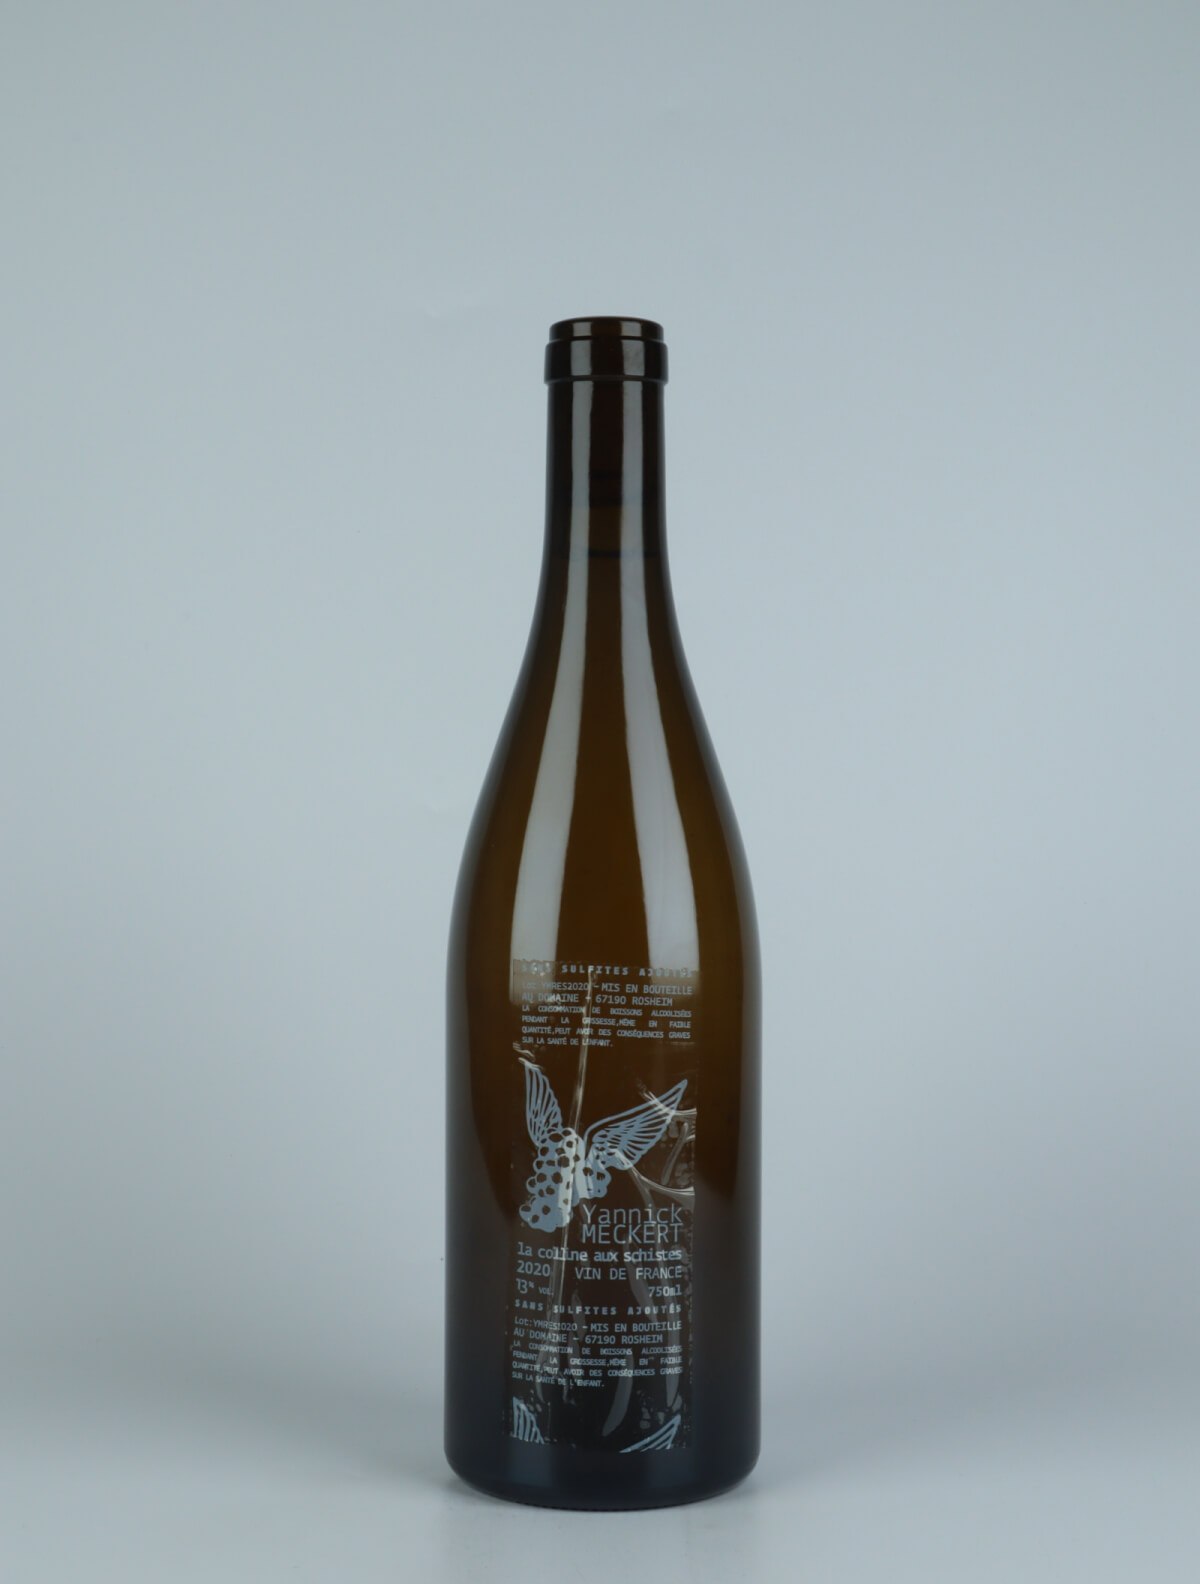 A bottle 2020 La Colline aux Schistes White wine from Yannick Meckert, Alsace in France